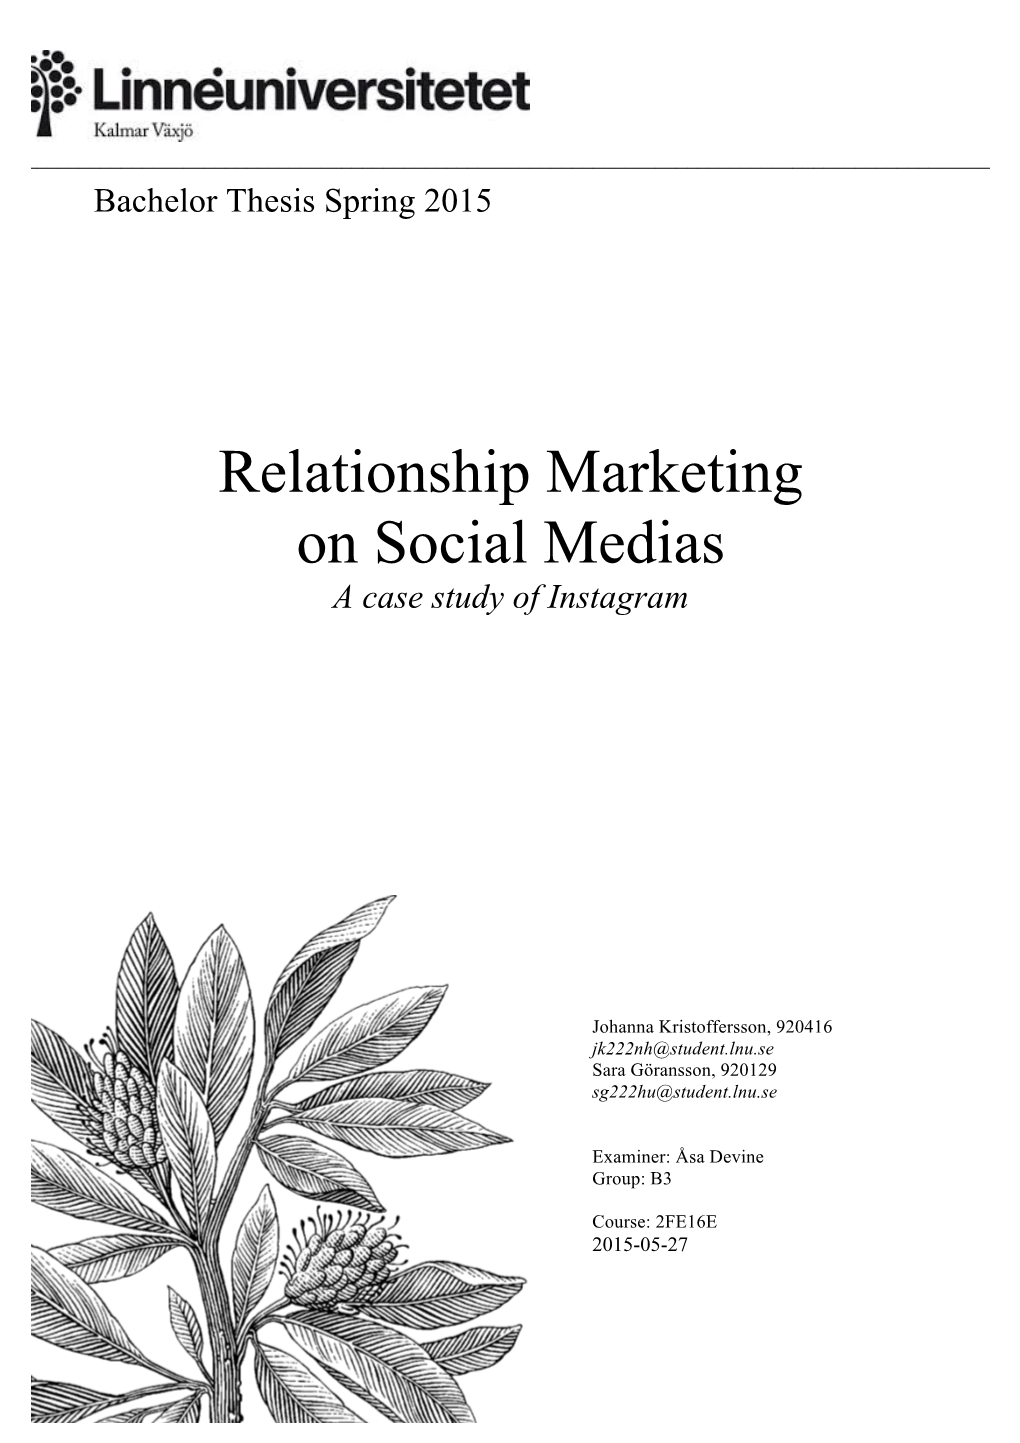 Relationship Marketing on Social Medias a Case Study of Instagram